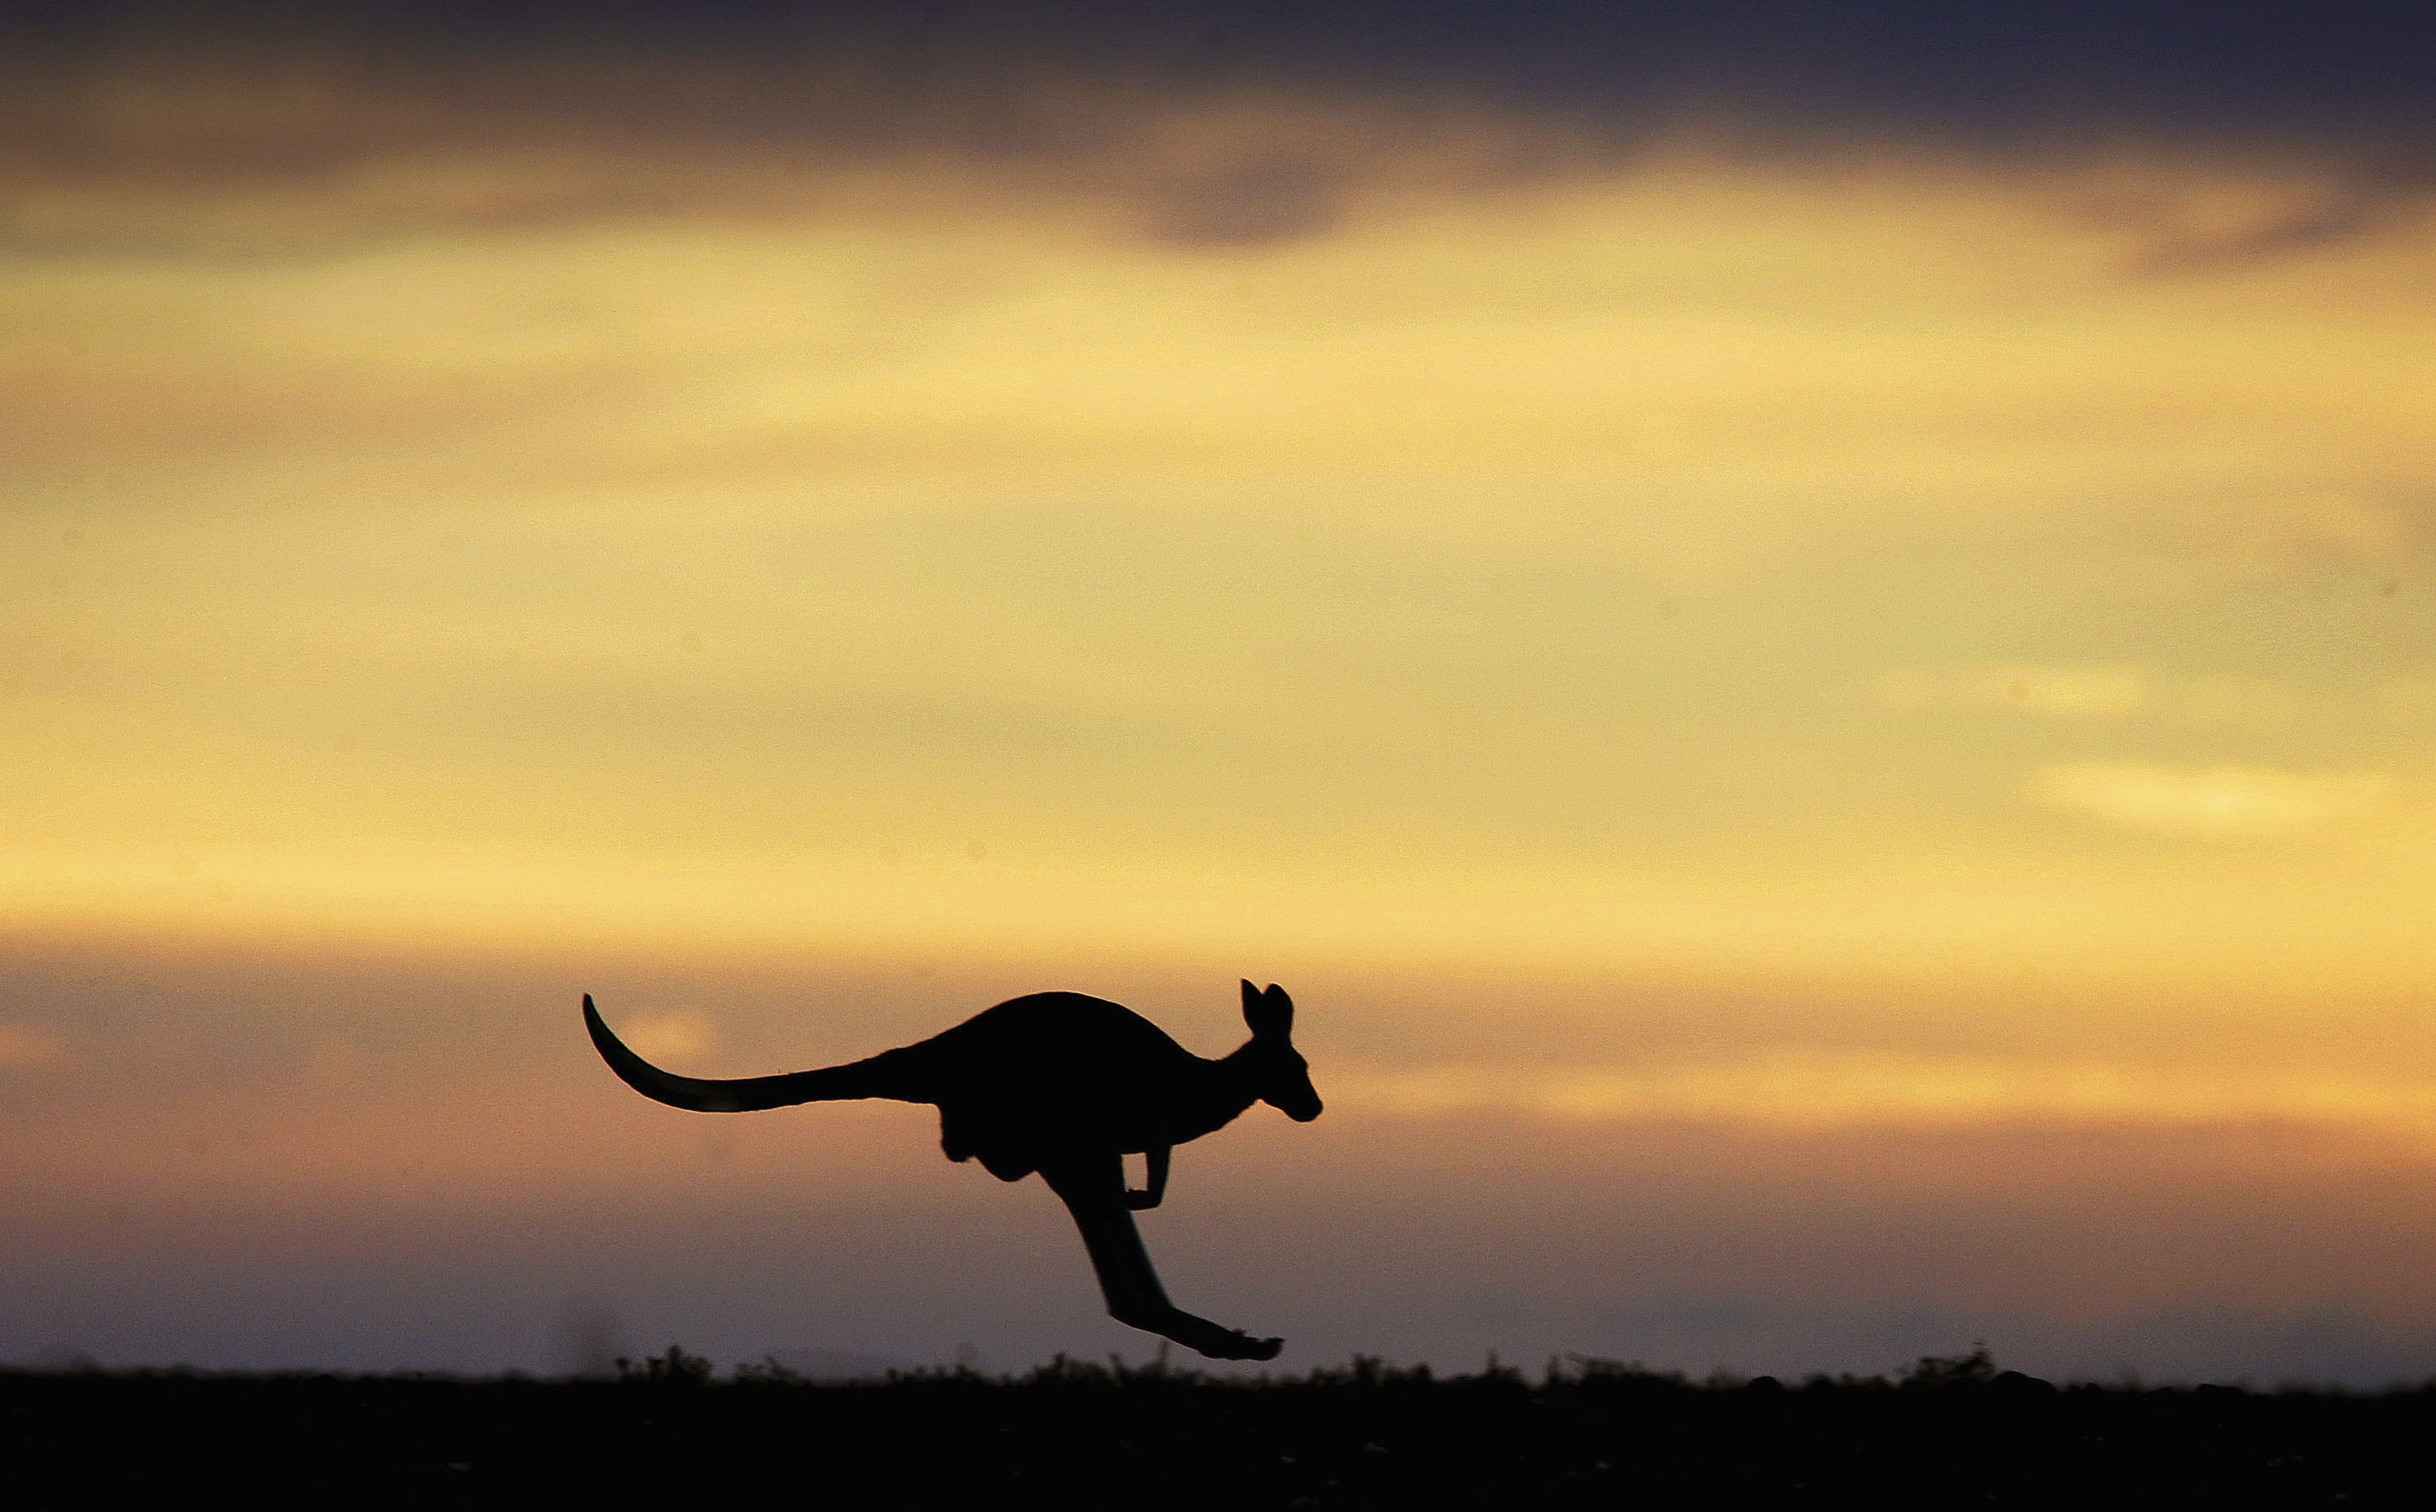 A kangaroo.